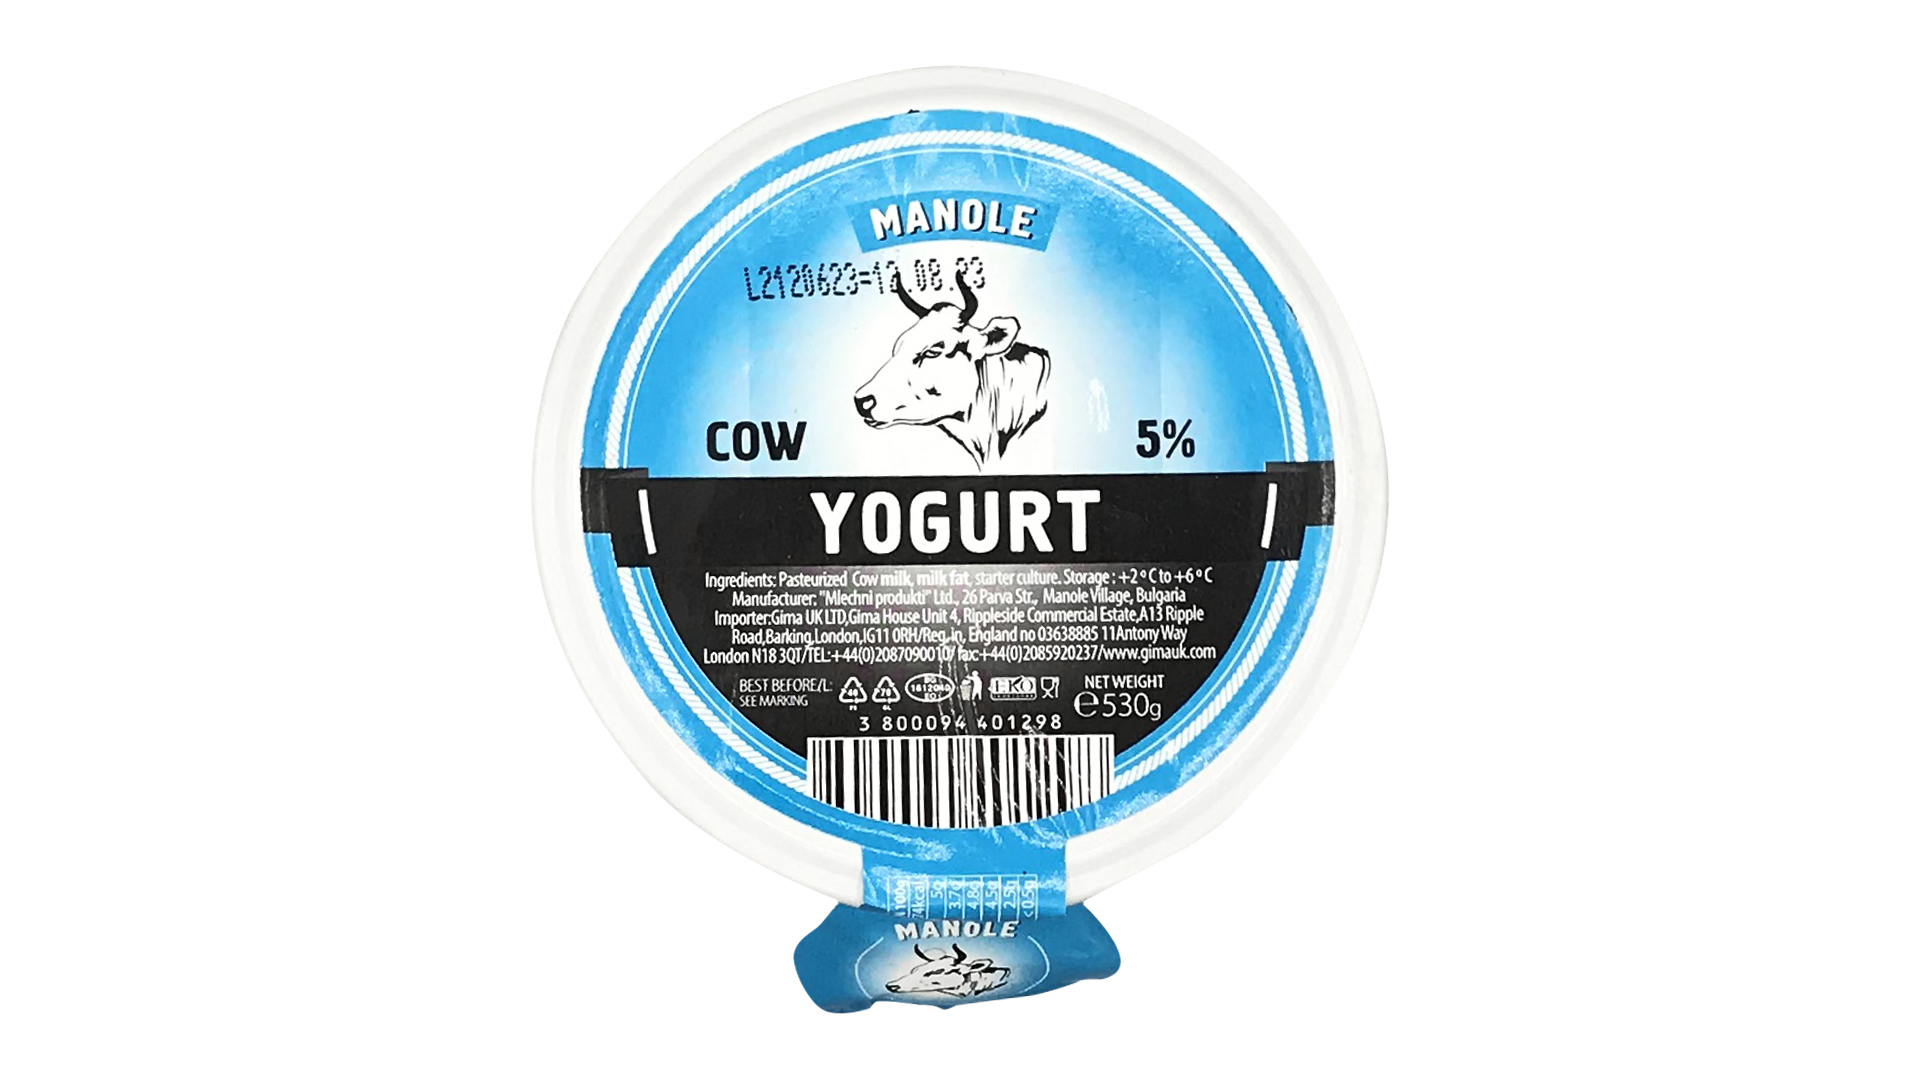 Manole Cow 5 Yogurt 530g 2